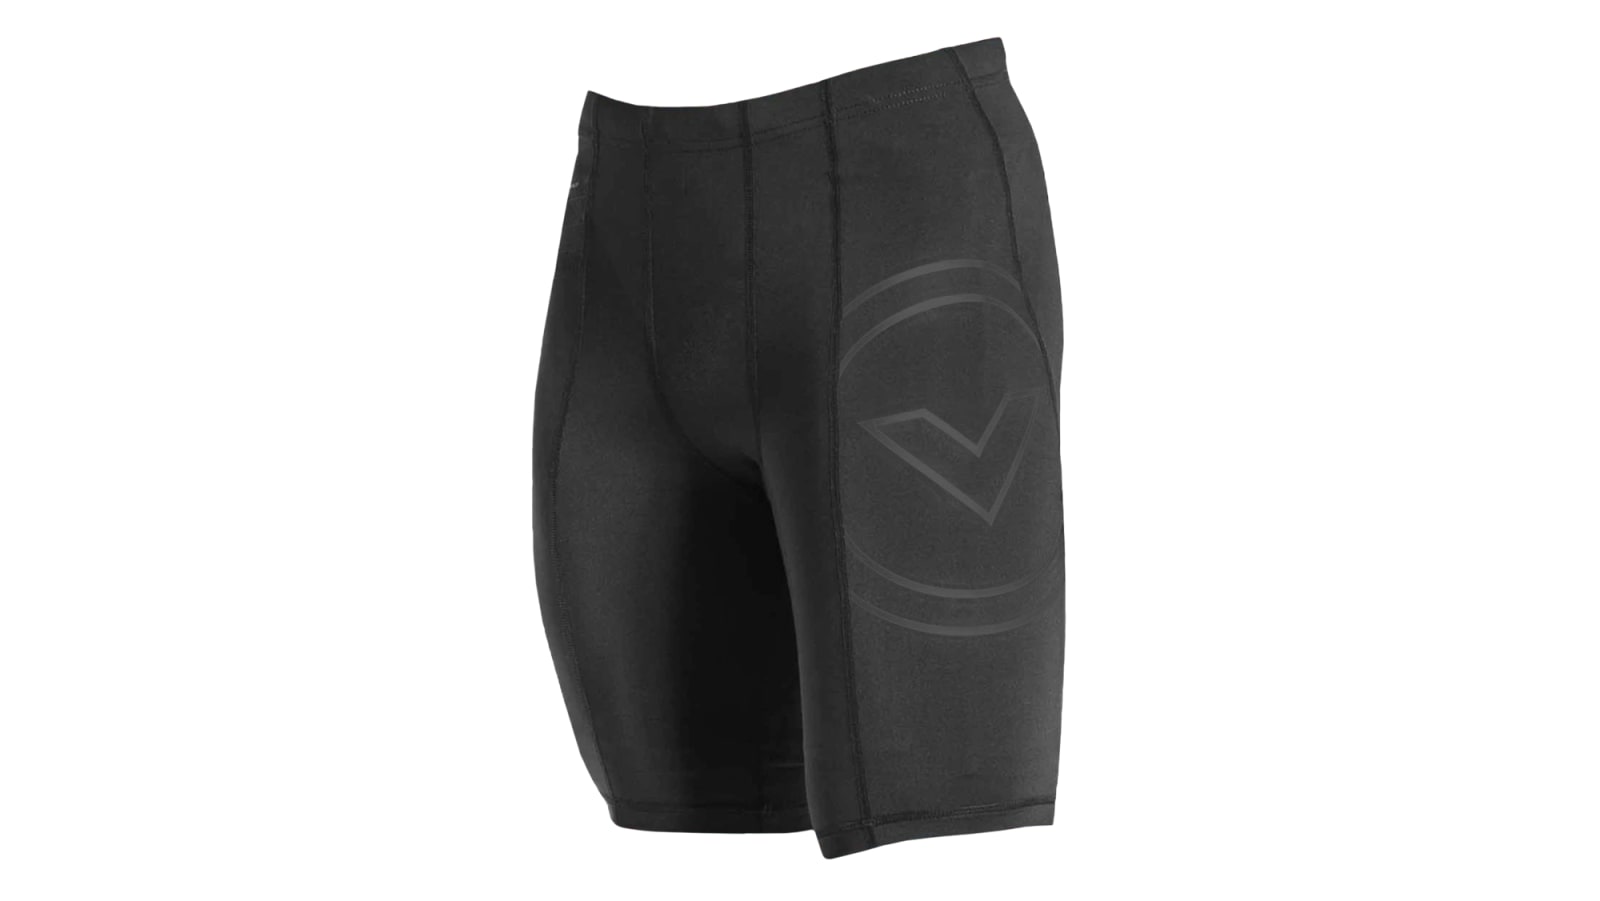 CompressionZ Men's Shorts, Small - Black - Import It All